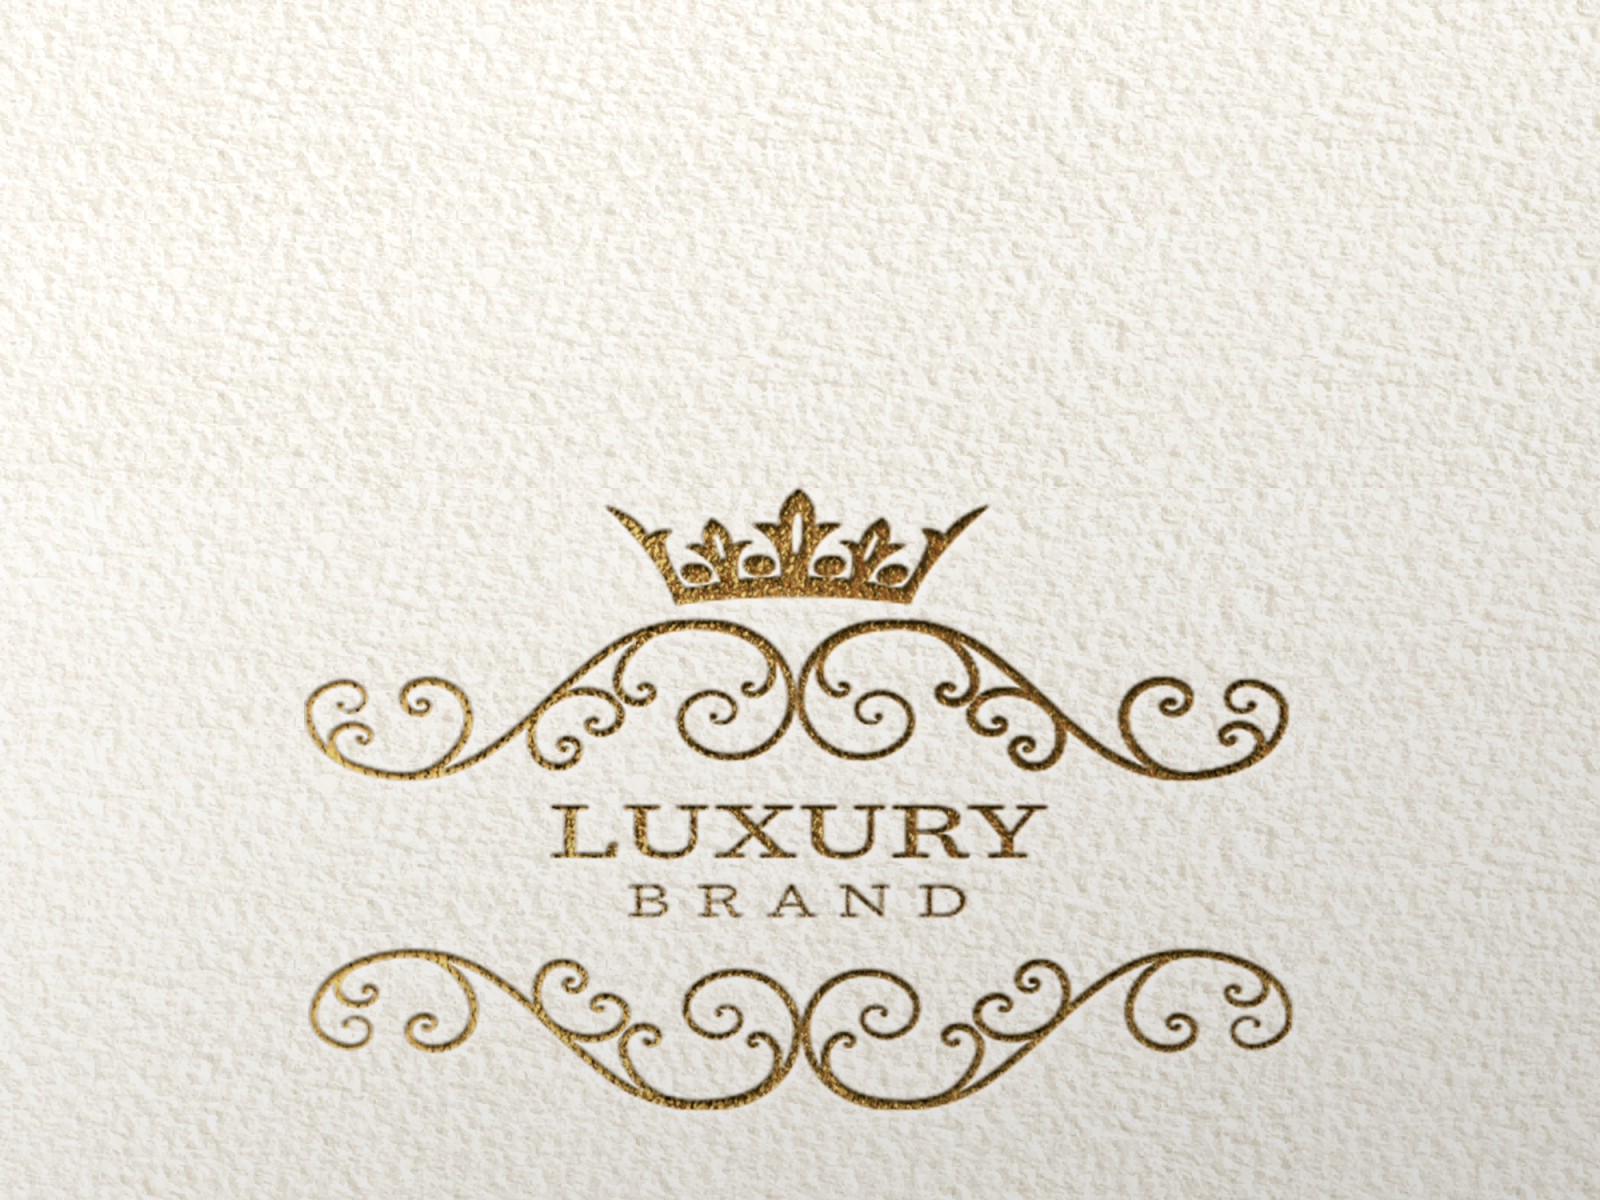 luxury brand by YASSINE on Dribbble